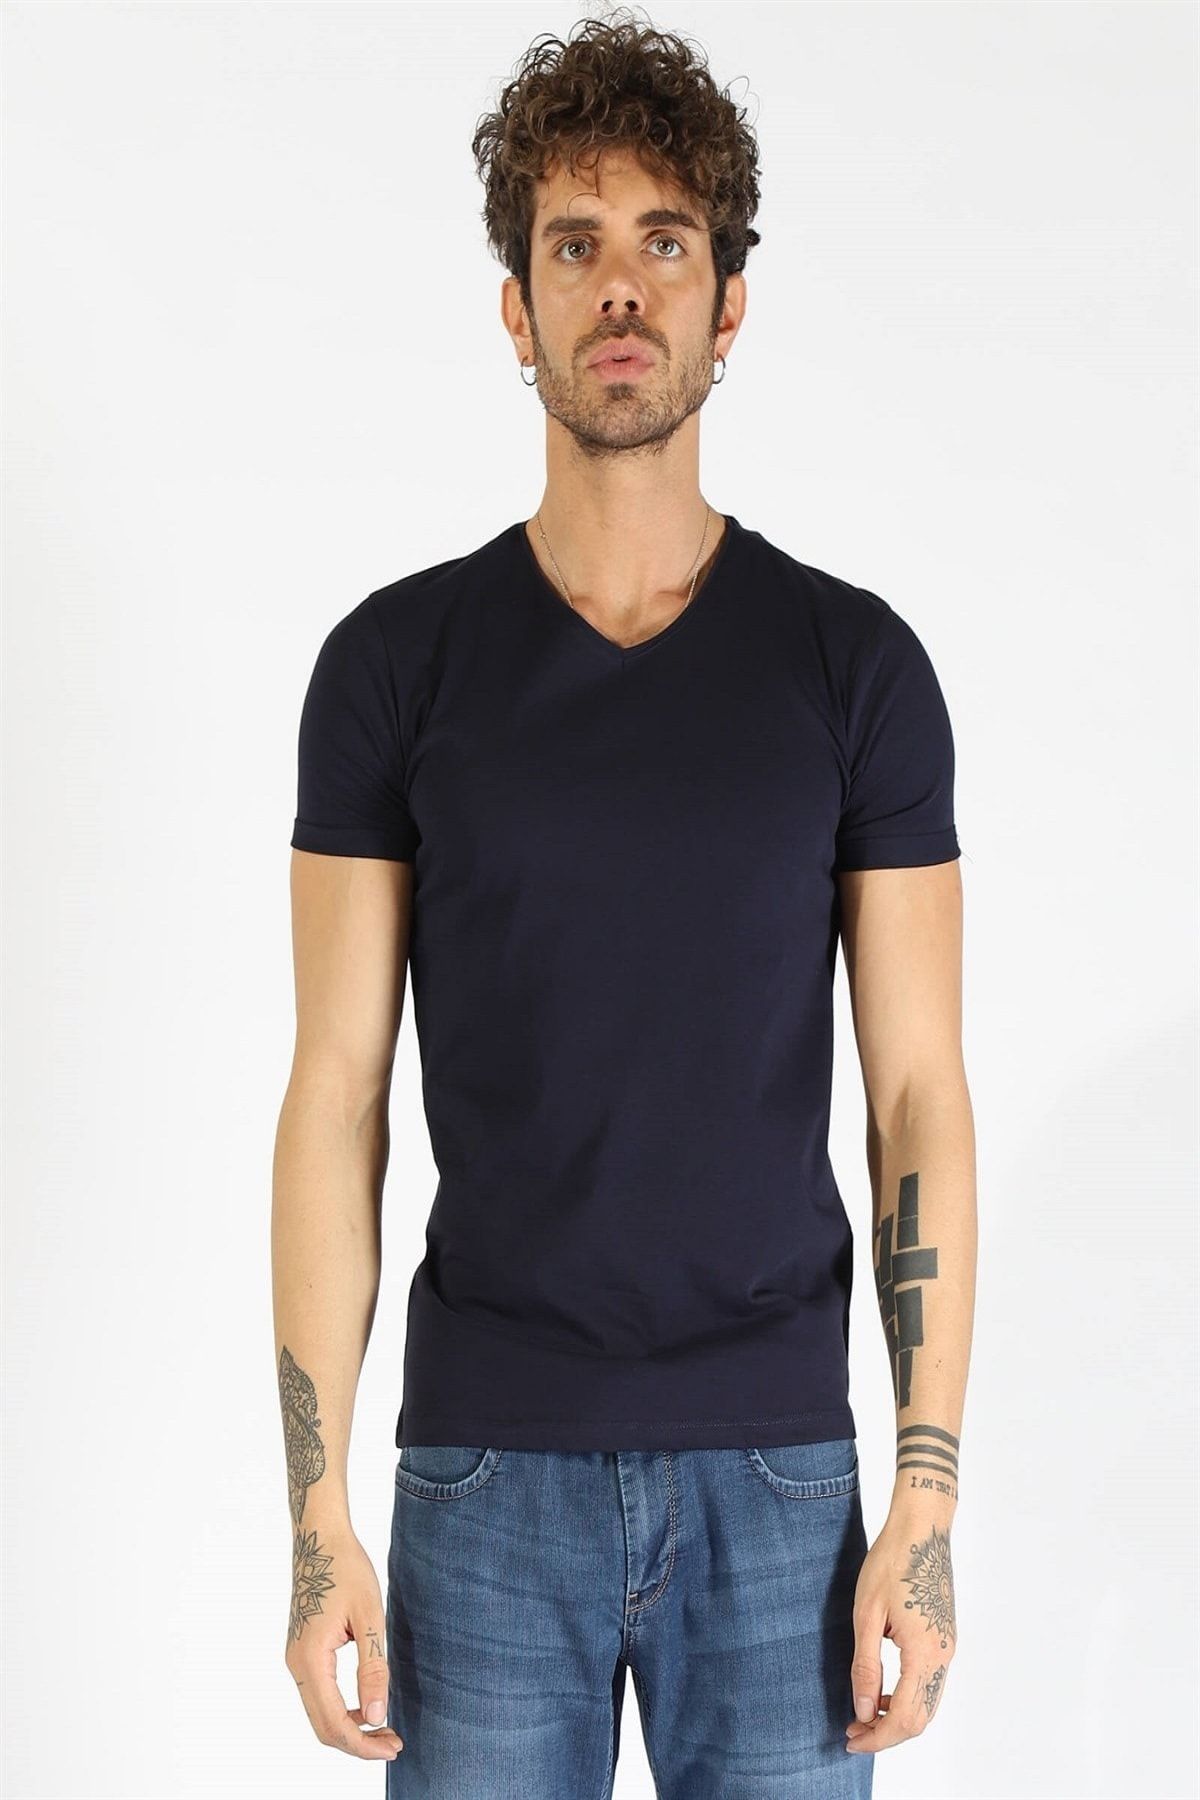 Twister Jeans Twister Erkek T-shirt 1827 (t) Lacivert